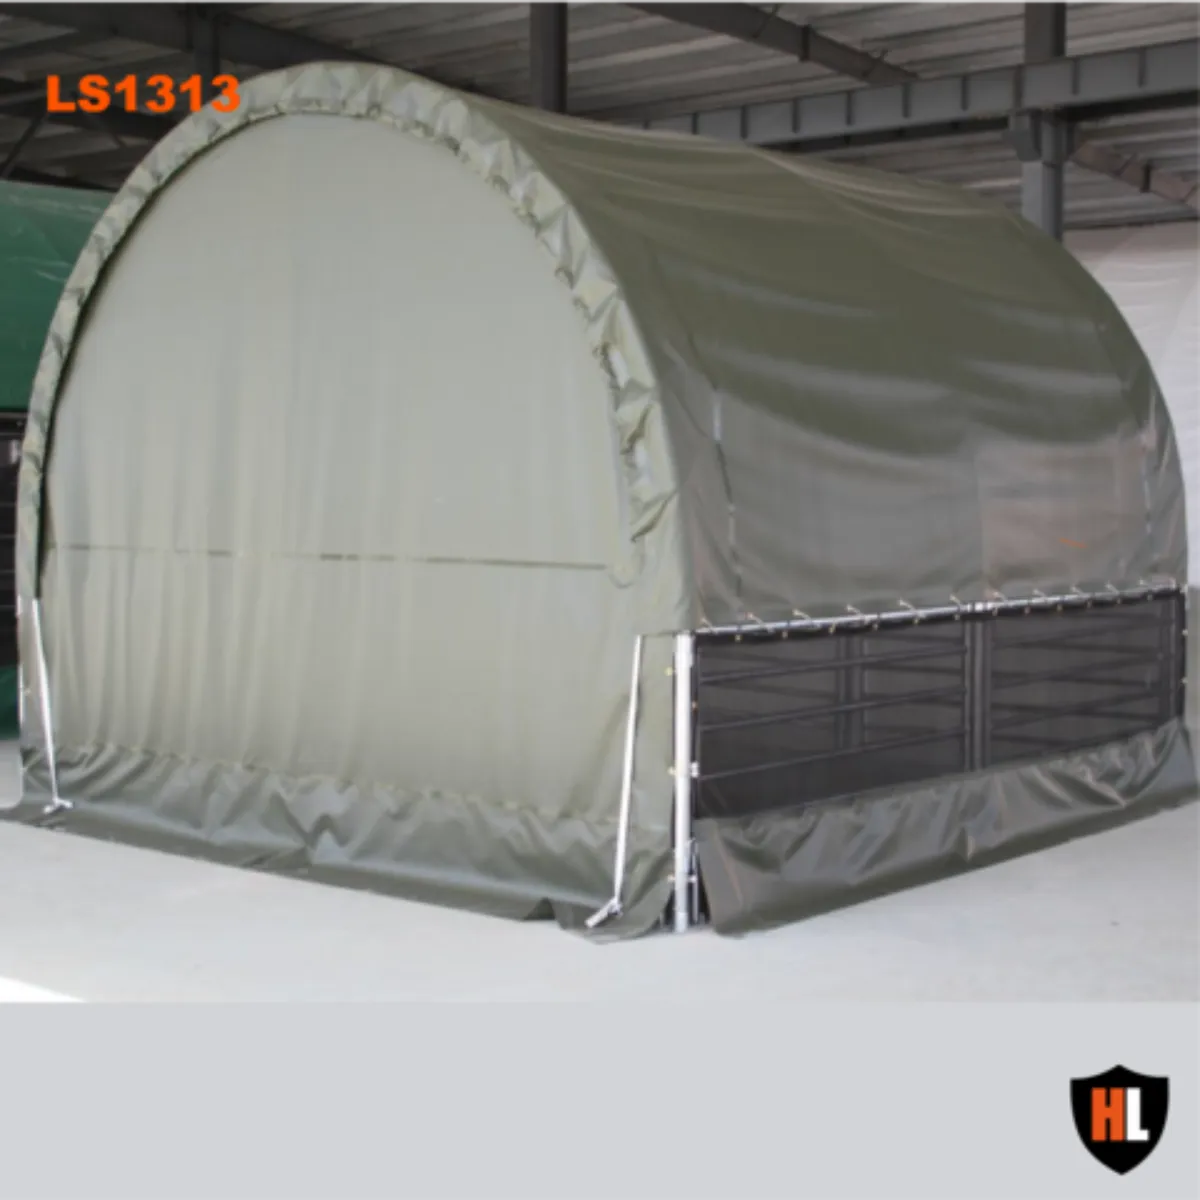 Livestock Shelter (Military Green) (4 x 4 x 3.15m) - Image 1